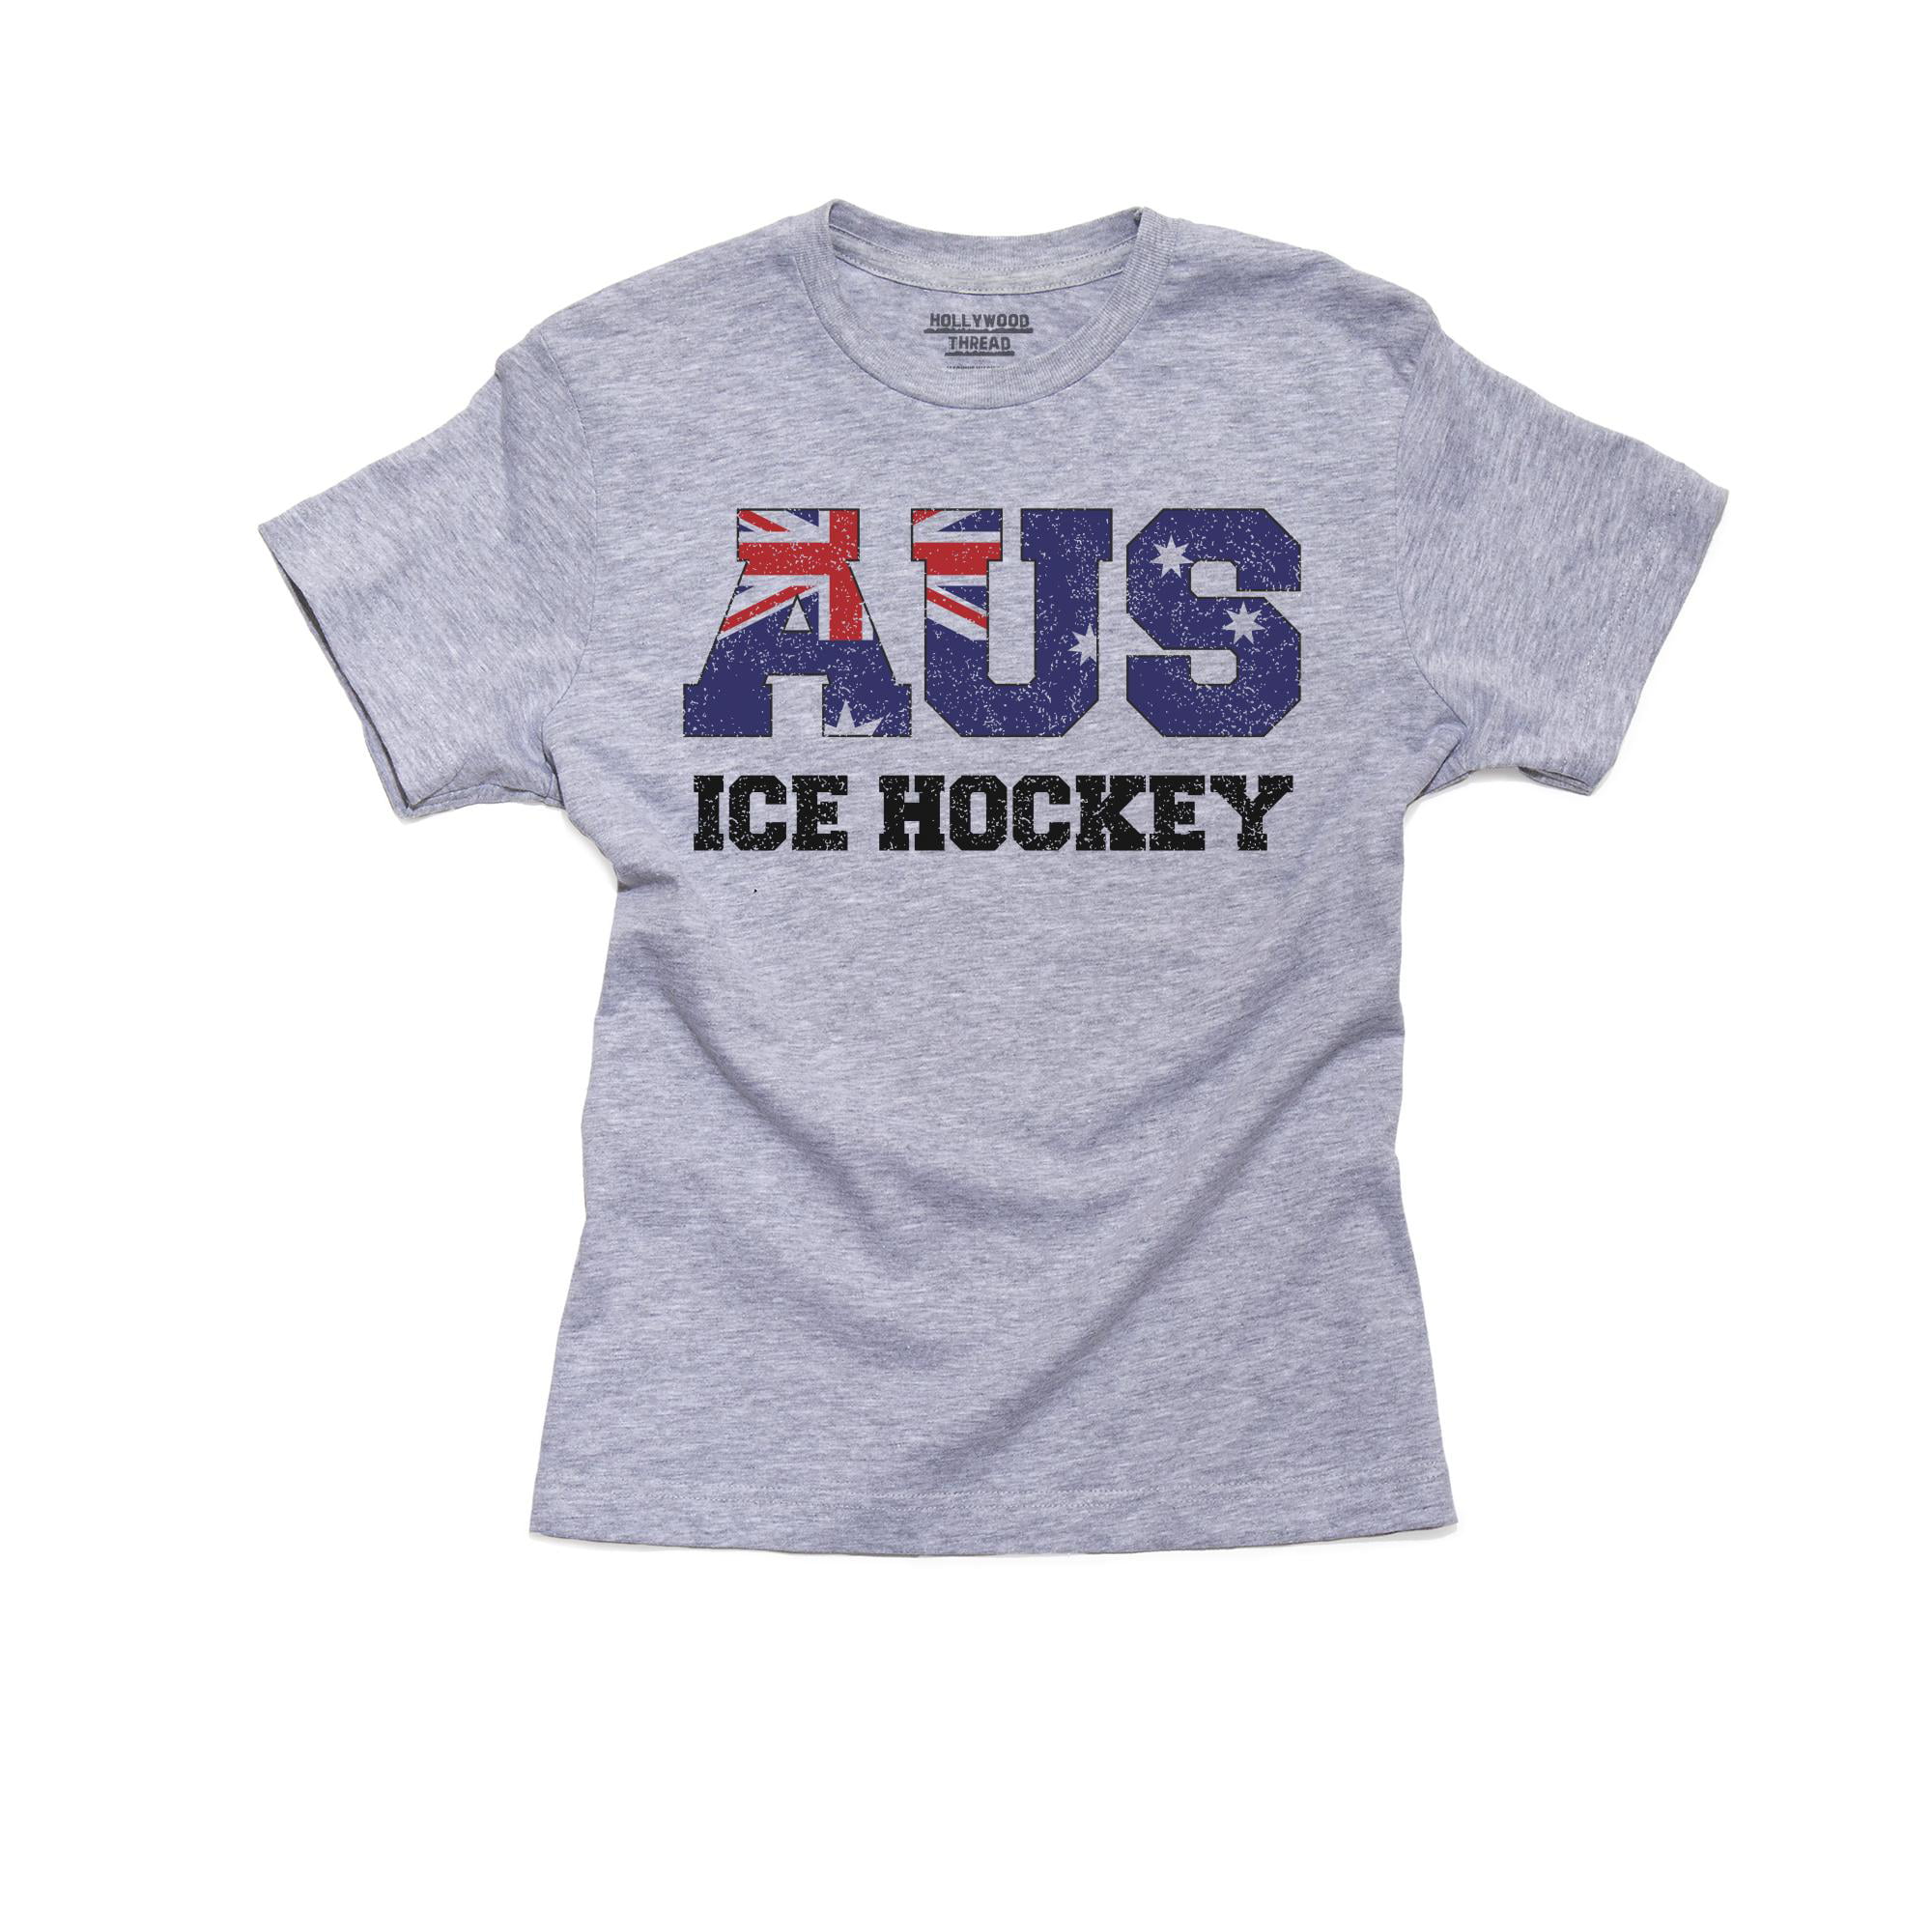 Team Australia Ice Hockey Jersey, White/Blue, Men/Youth/Wome